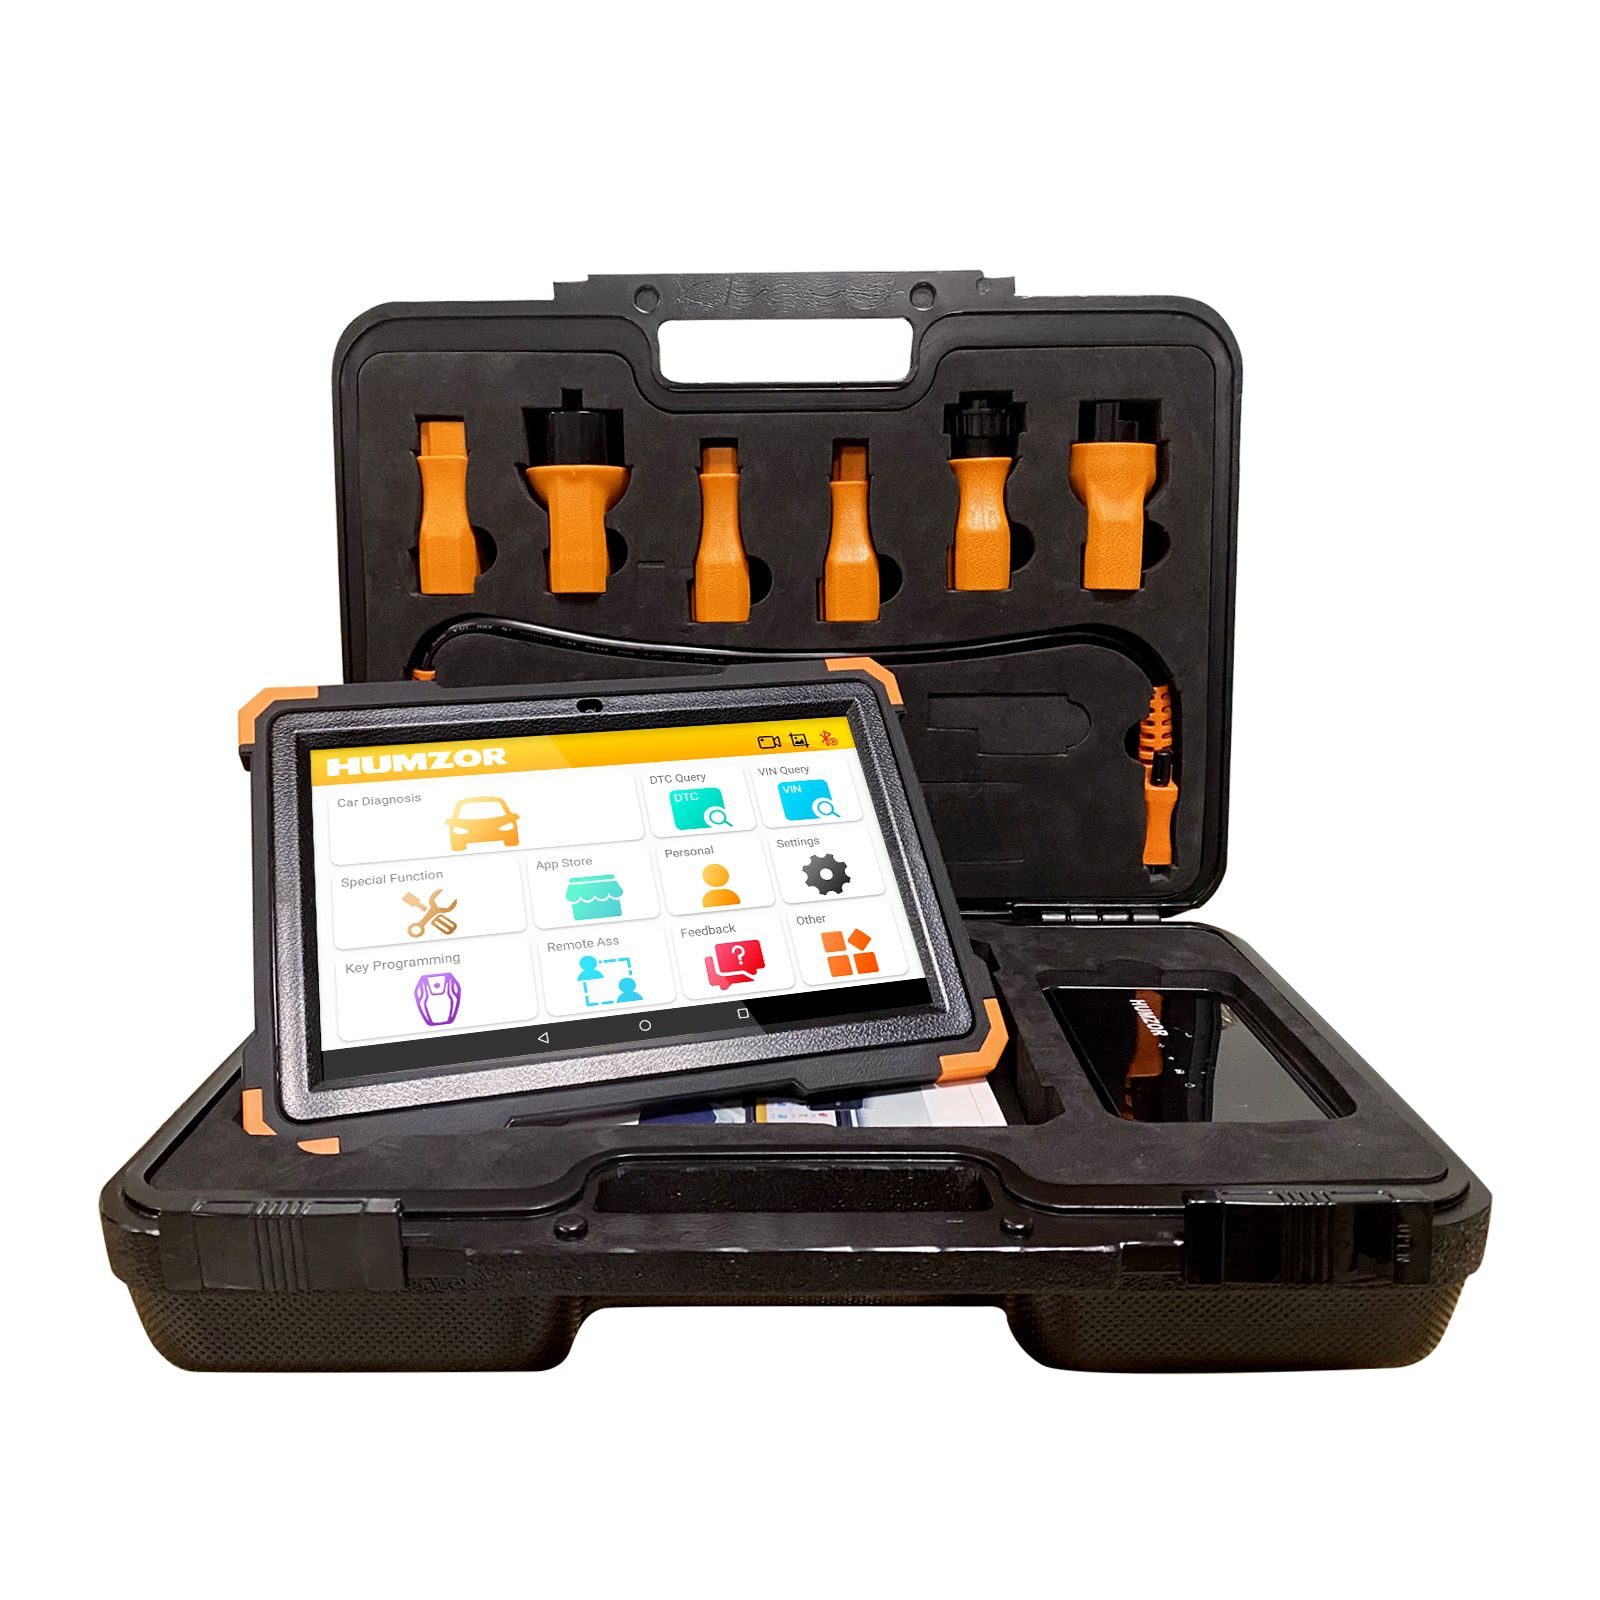 Humzor ns366s Automotive Diagnostic Scanner Tablet SAS CVT Gear Learning 13 complete System for Reset Automotive obd 1 / 2 Diagnostic tool